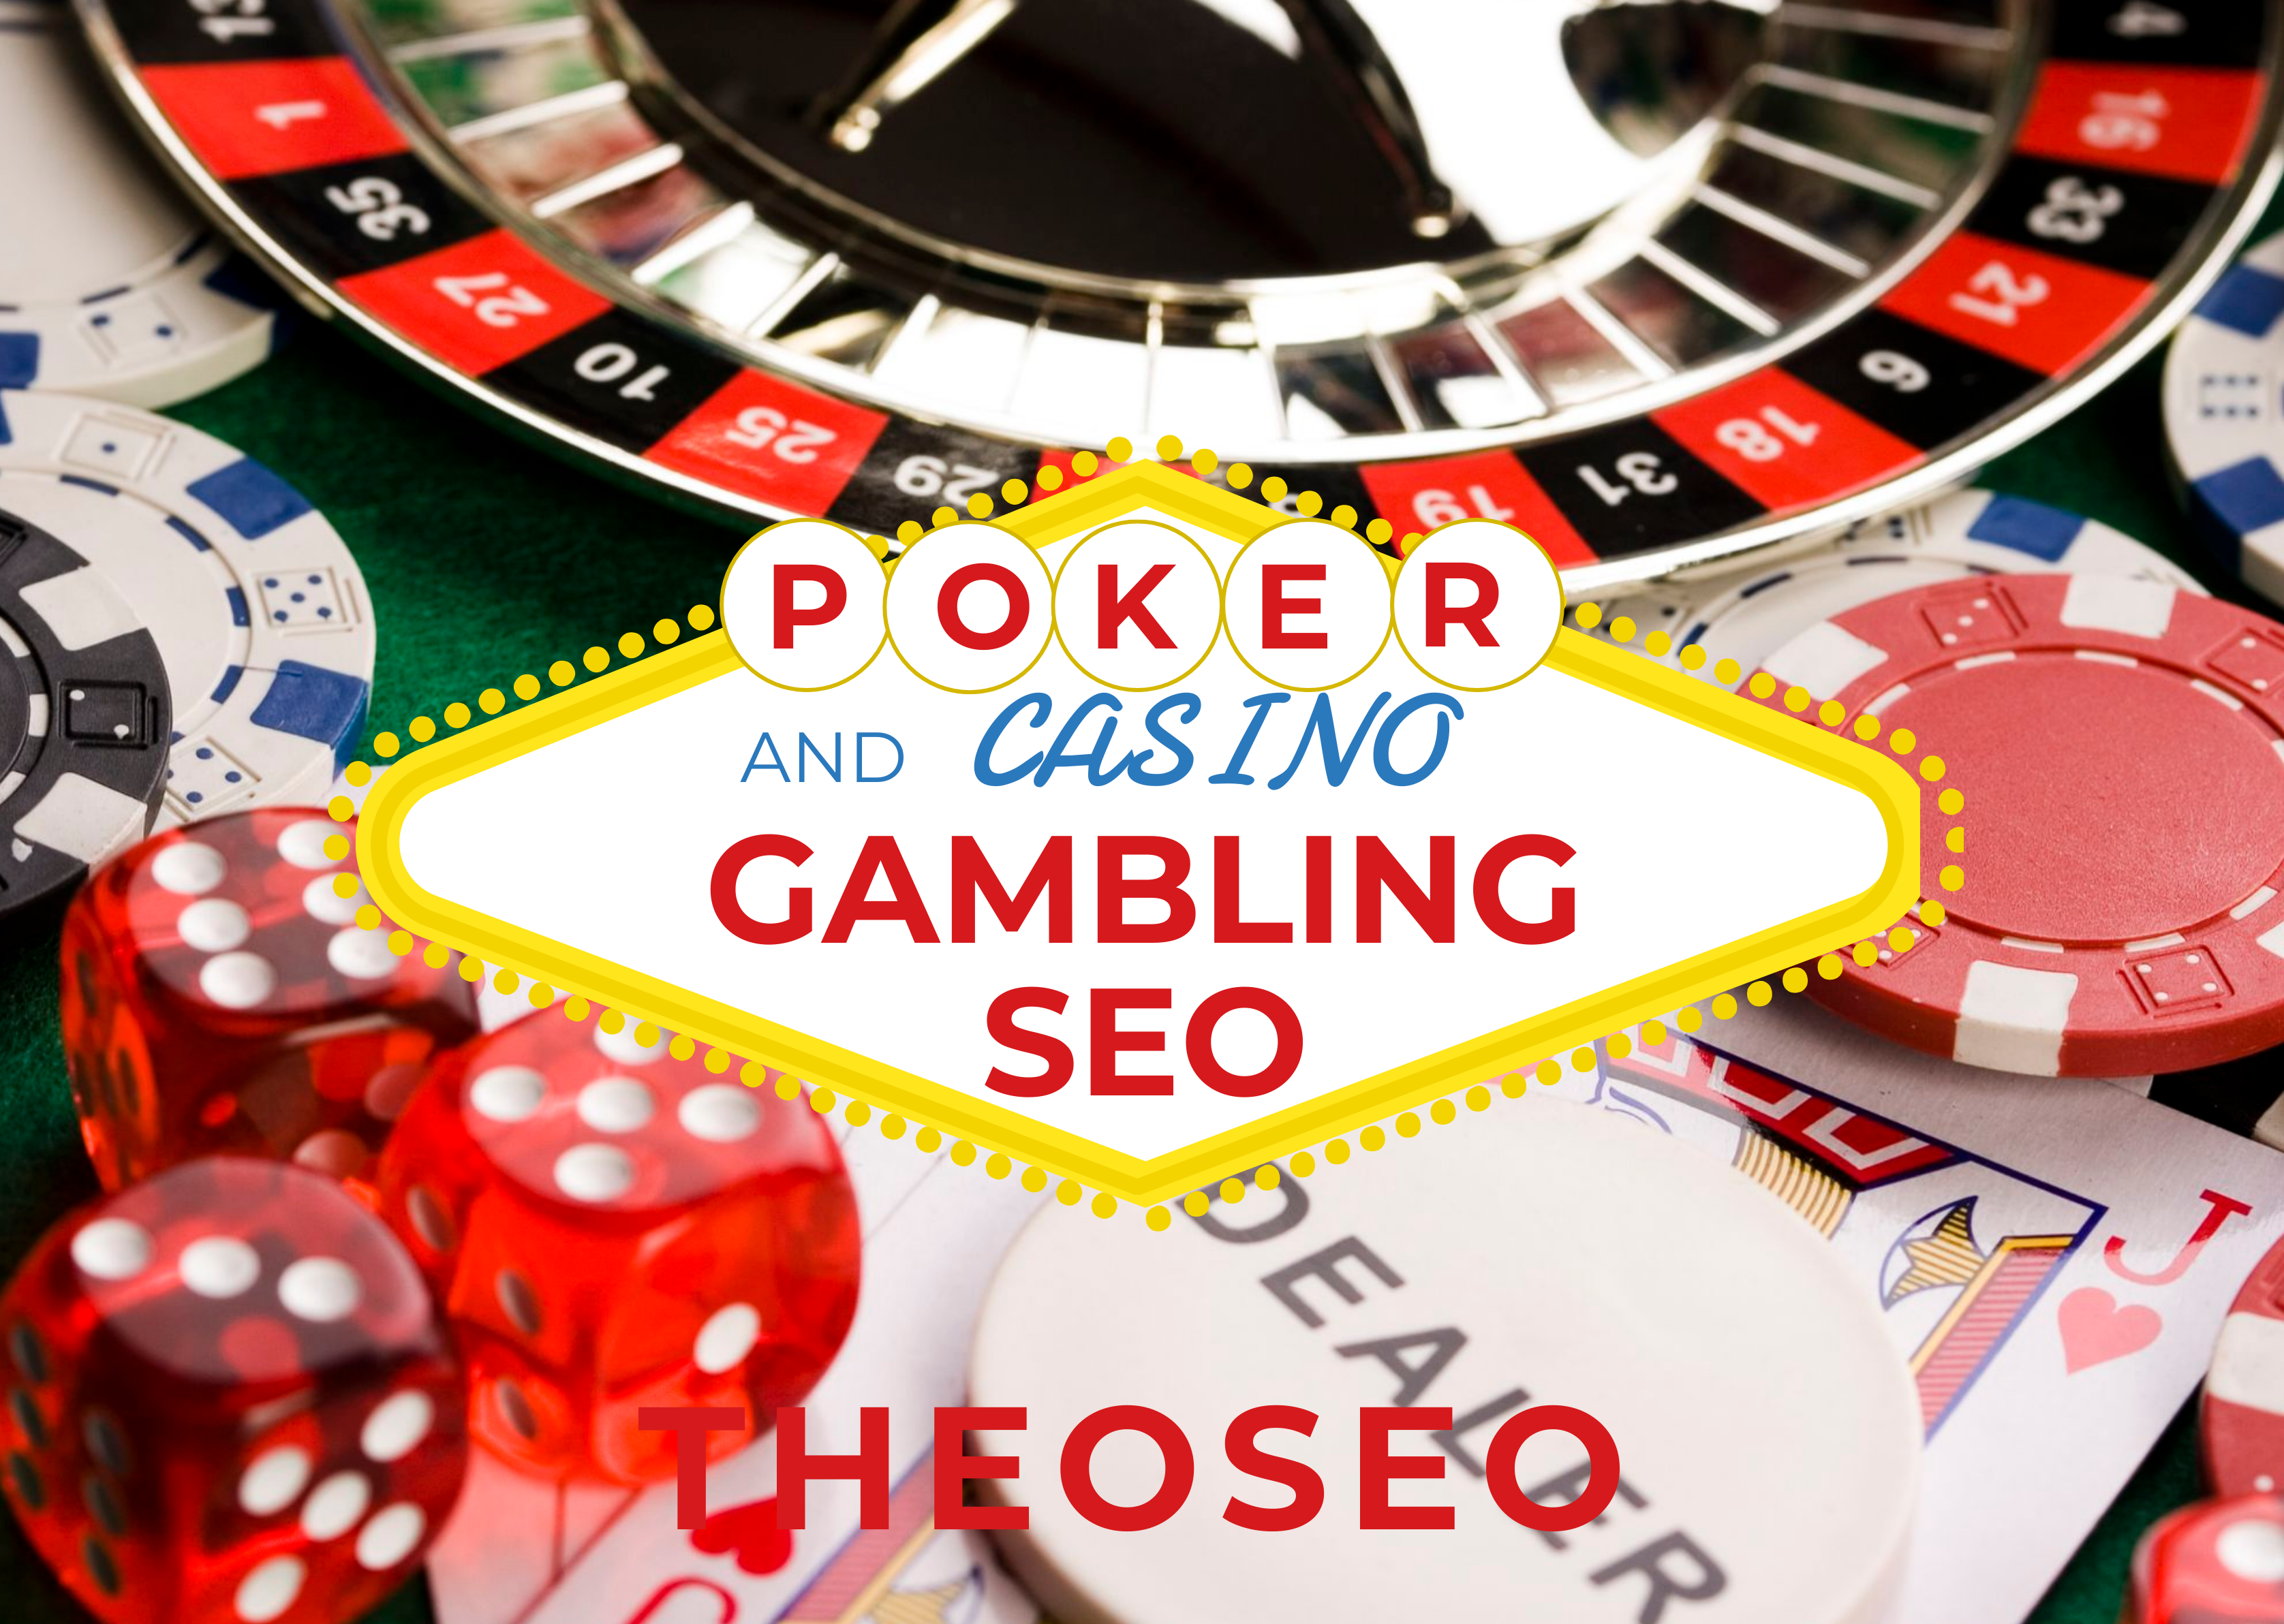 Gambling SEO - Poker, Casino, Judi, Agen Bola Related Links, 1000 social signals and PBN backlinks